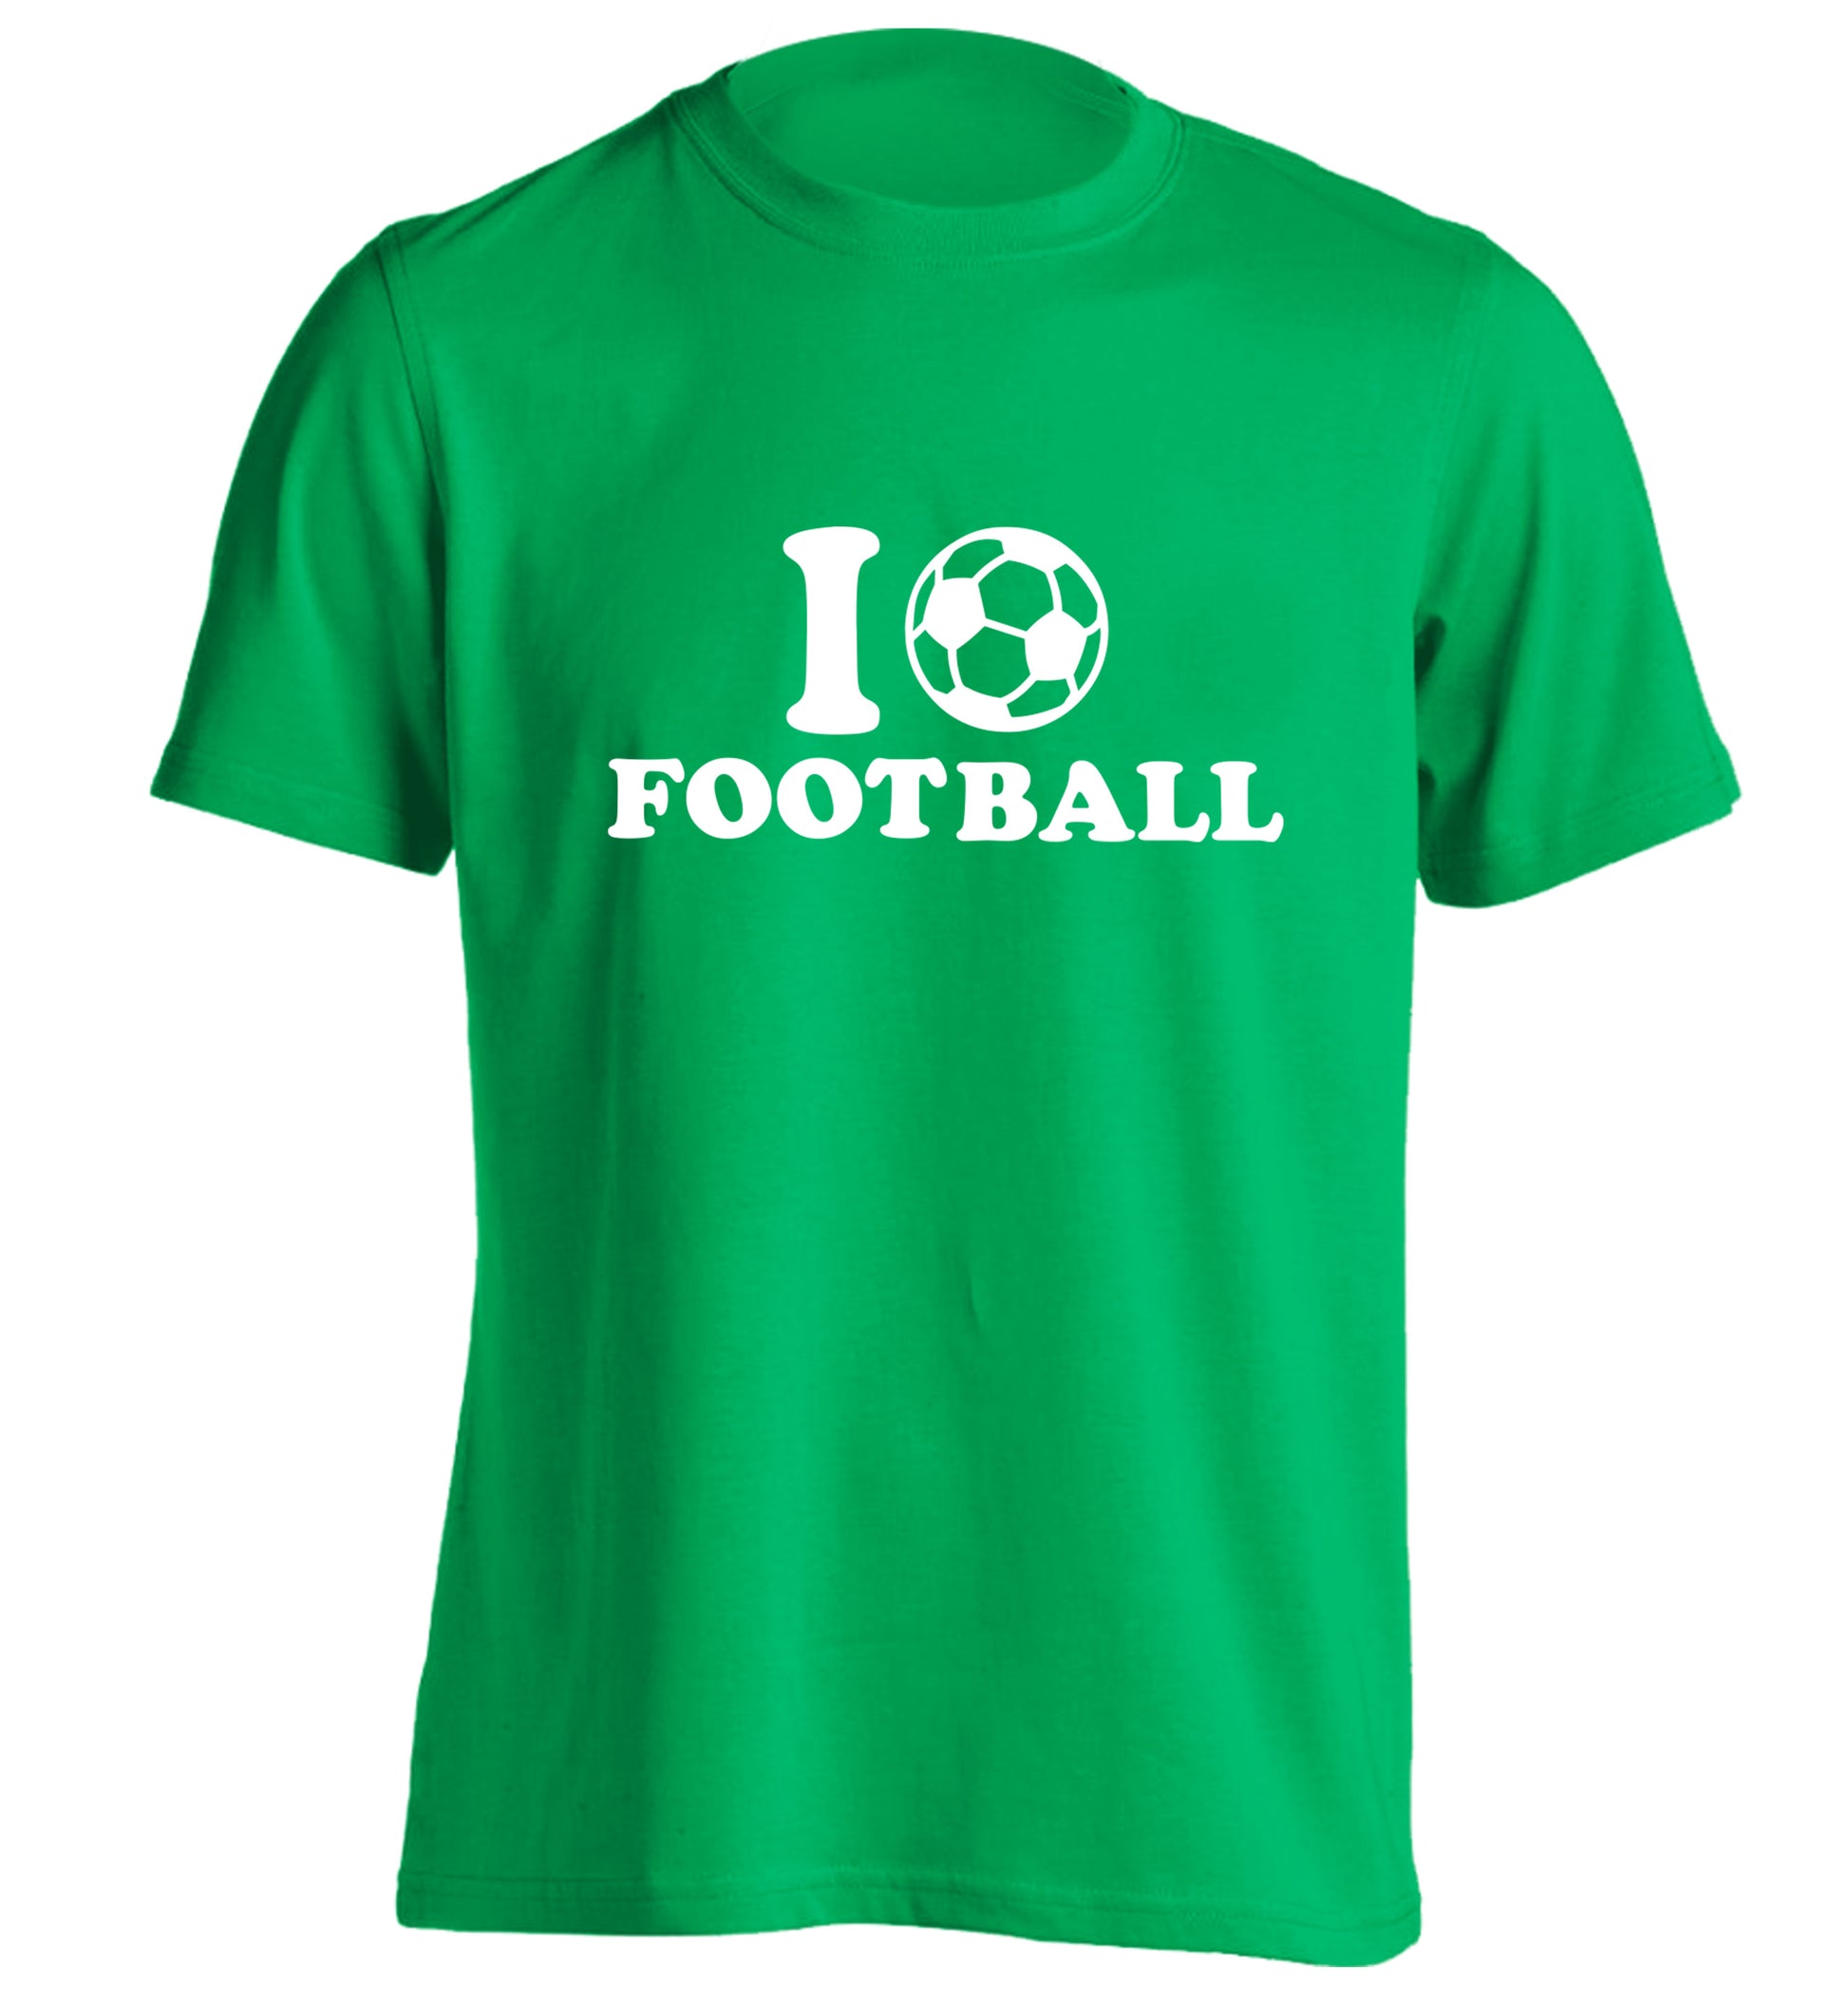 I love football adults unisexgreen Tshirt 2XL